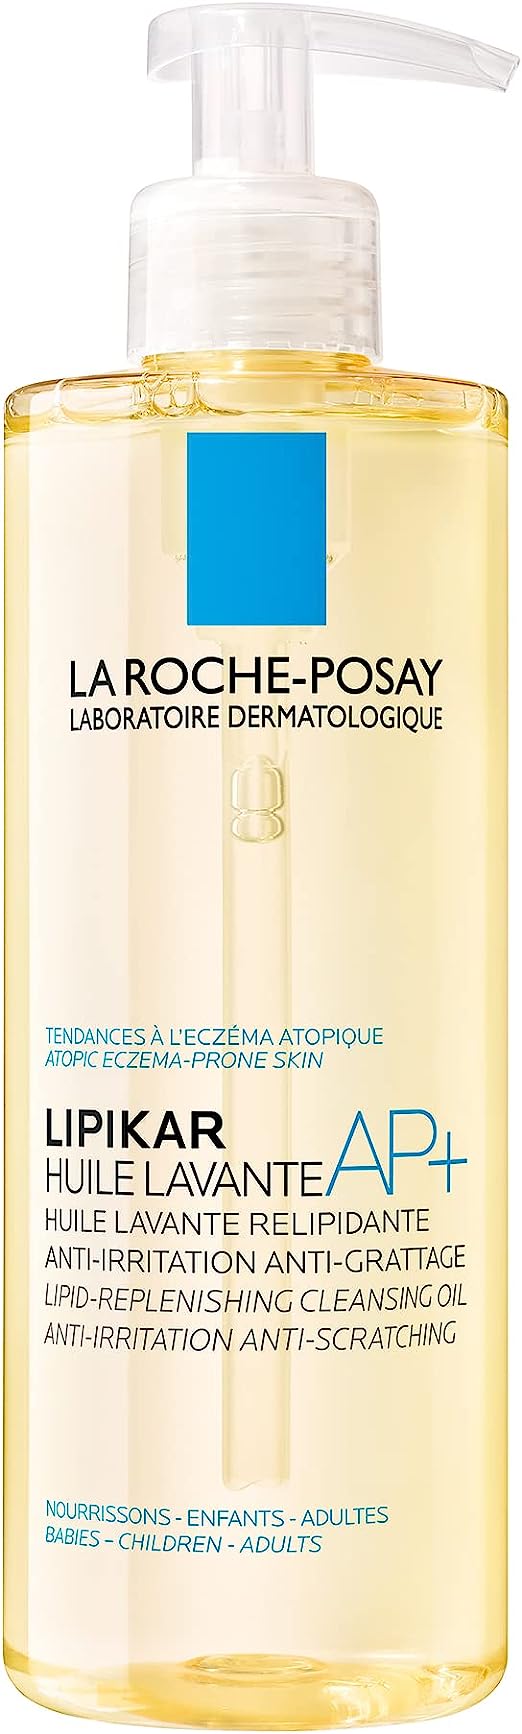 La Roche Posay Lipikar Huile Lavante Ap+ 400ml